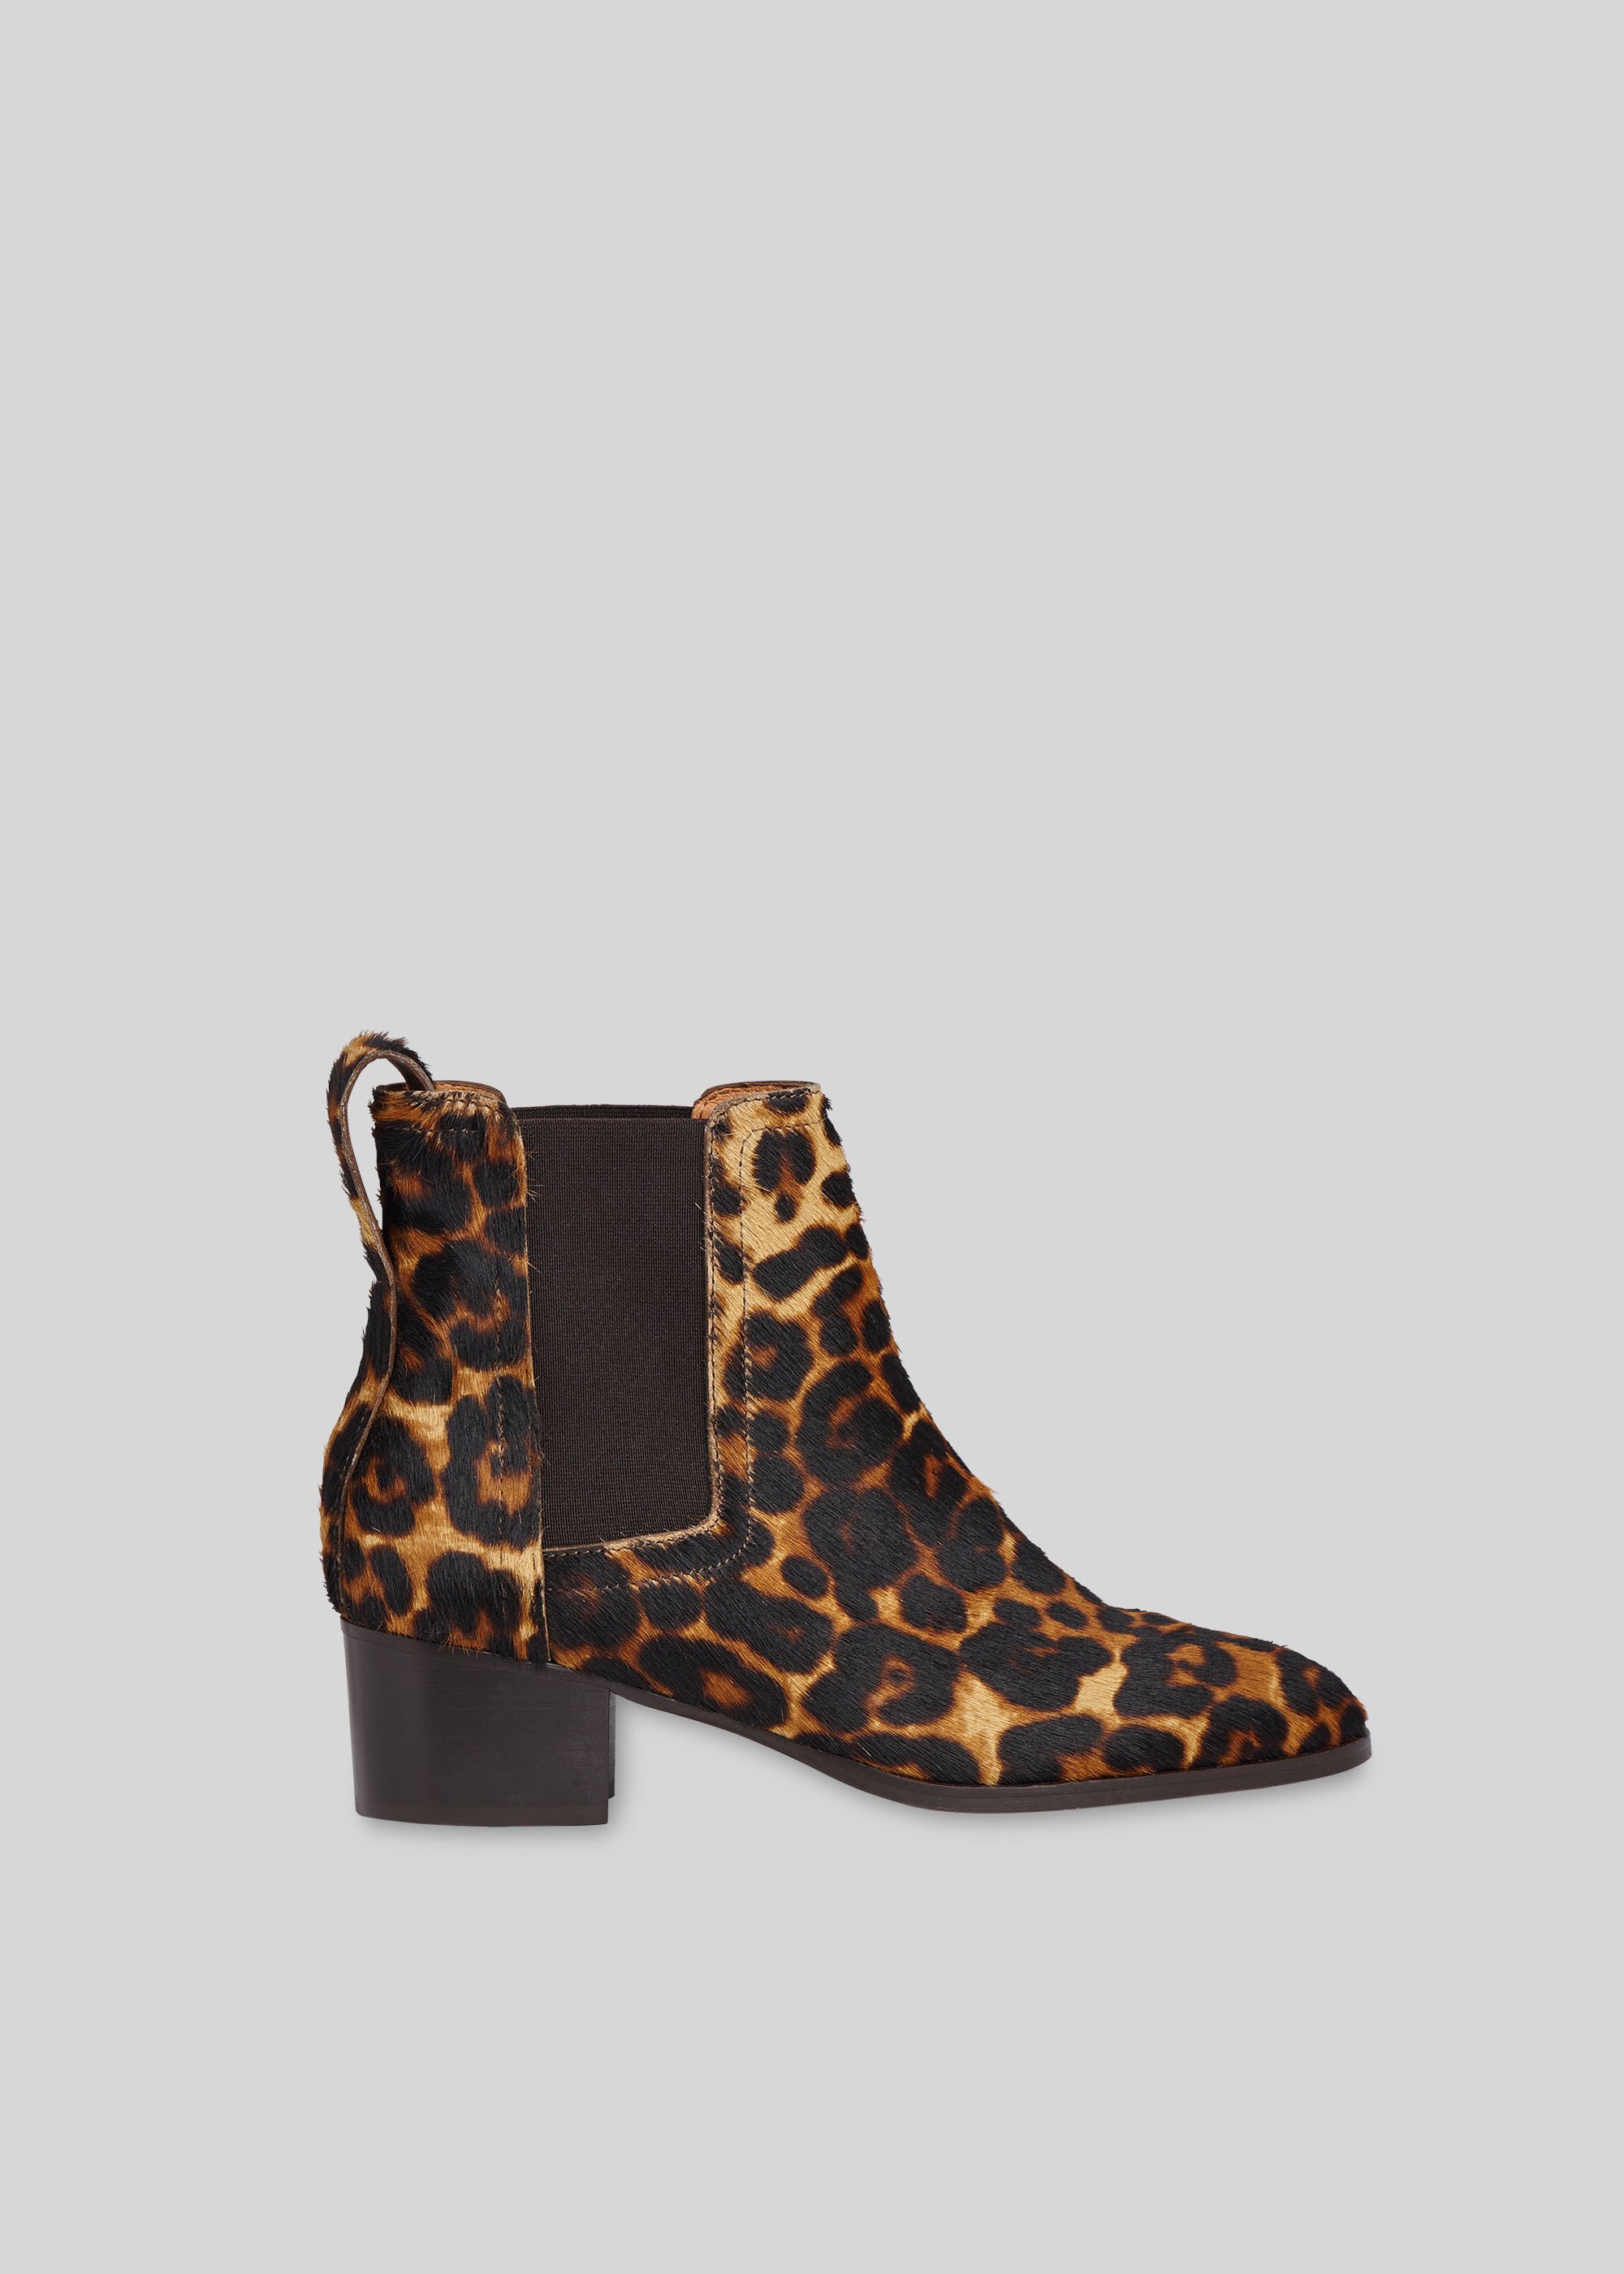 leopard print shoe boots uk